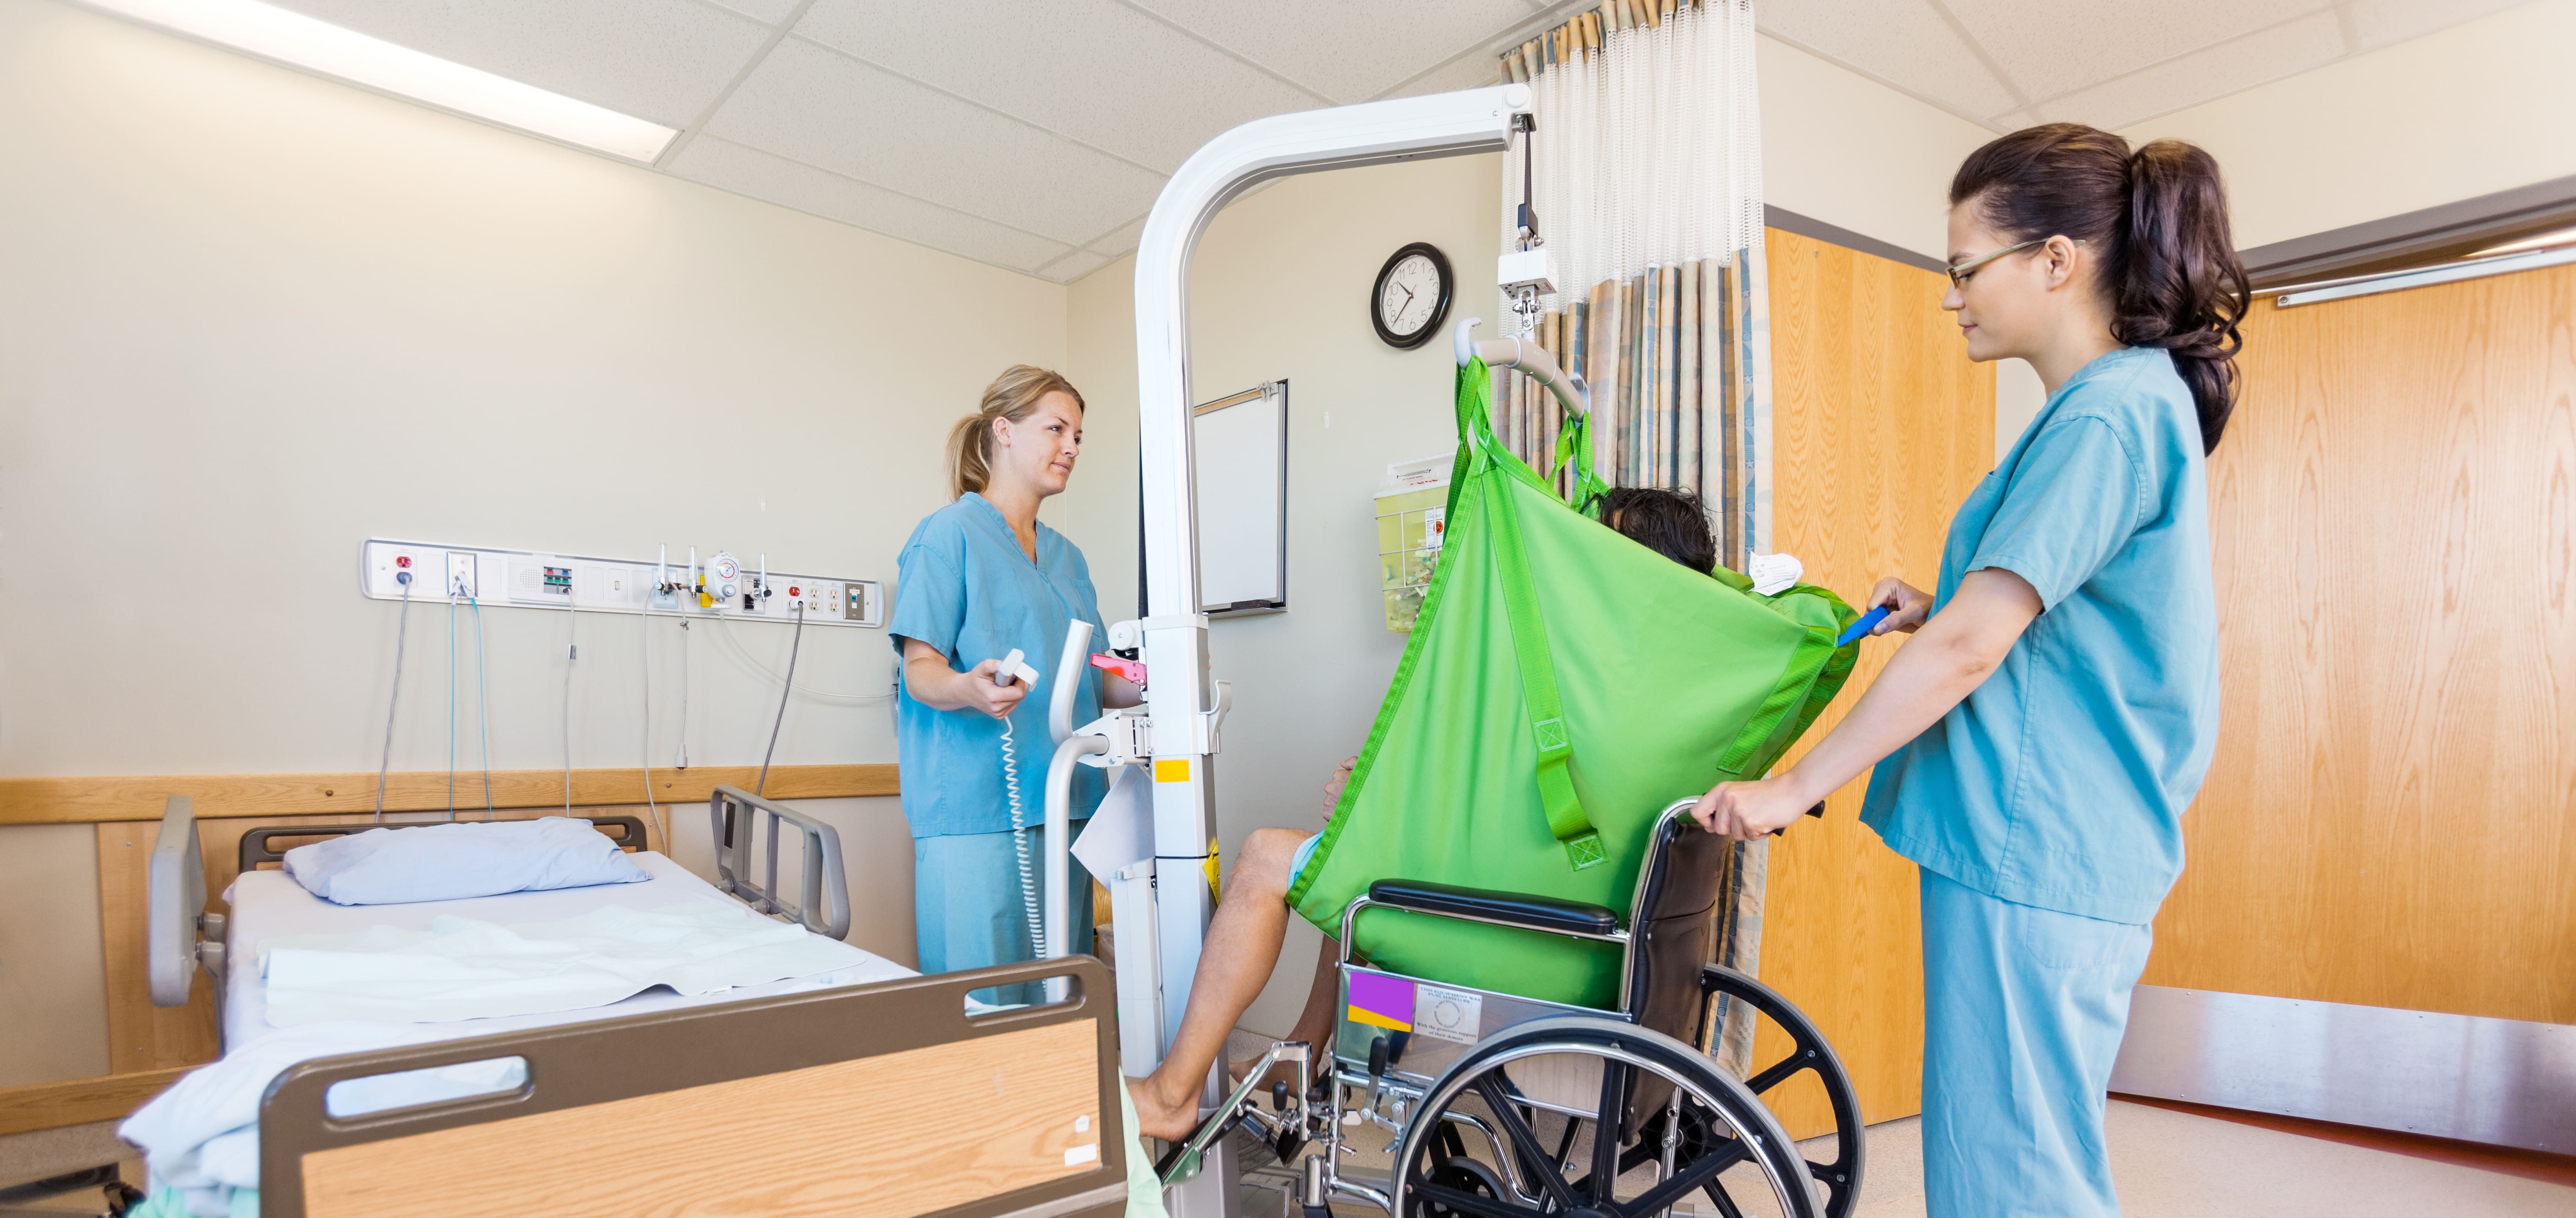 prevent nurses' patient-handling injuries